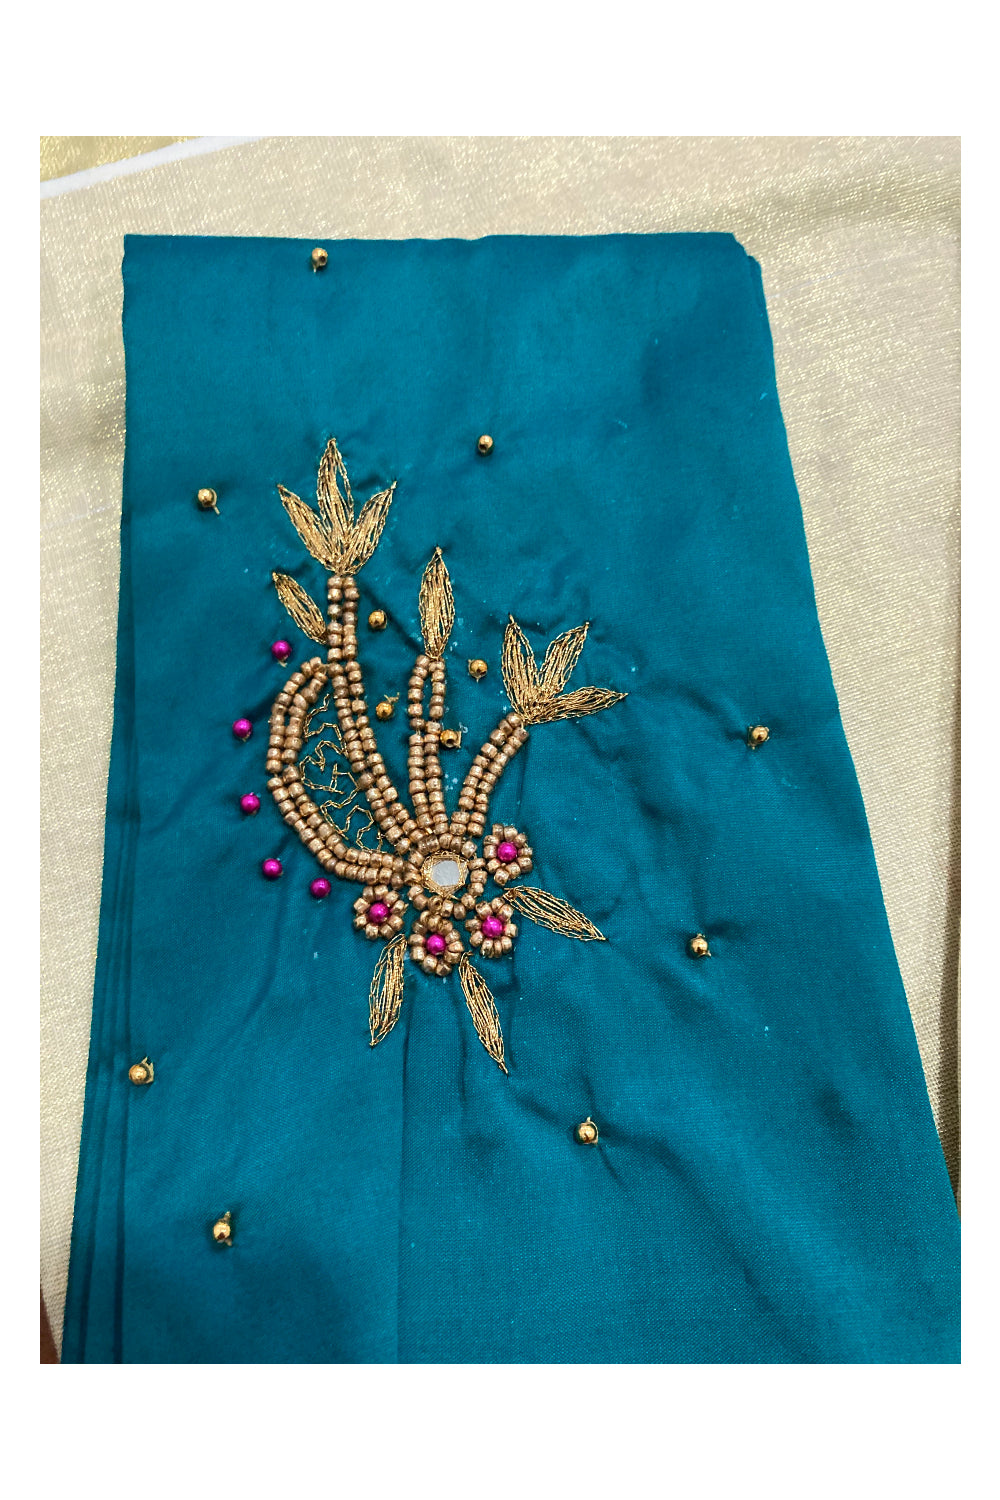 Kerala Tissue Kasavu Saree with Peacock Themed Bead Work Design and Green Blouse Piece